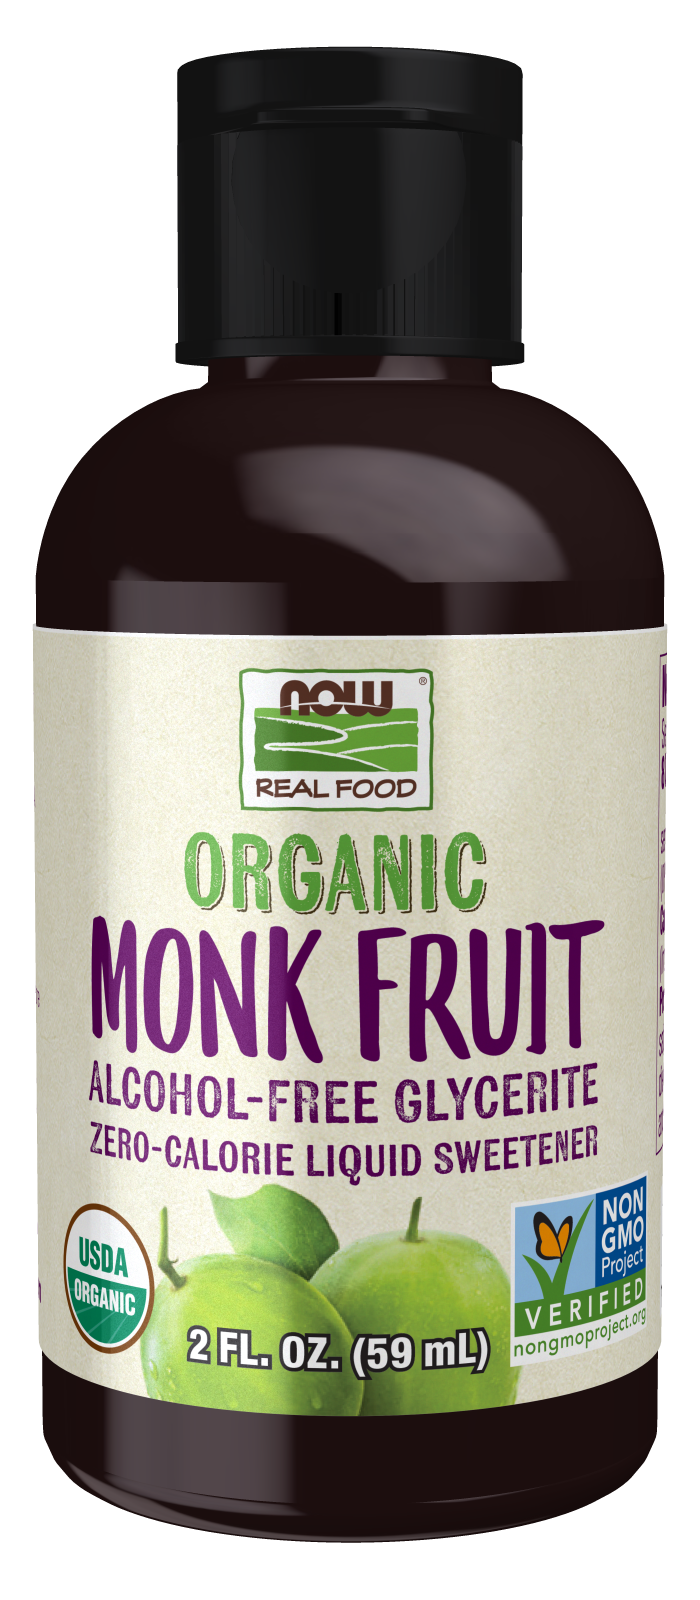 Monk Fruit Liquid, Organic Alcohol-Free Glycerite - 2 fl. oz. Bottle Front